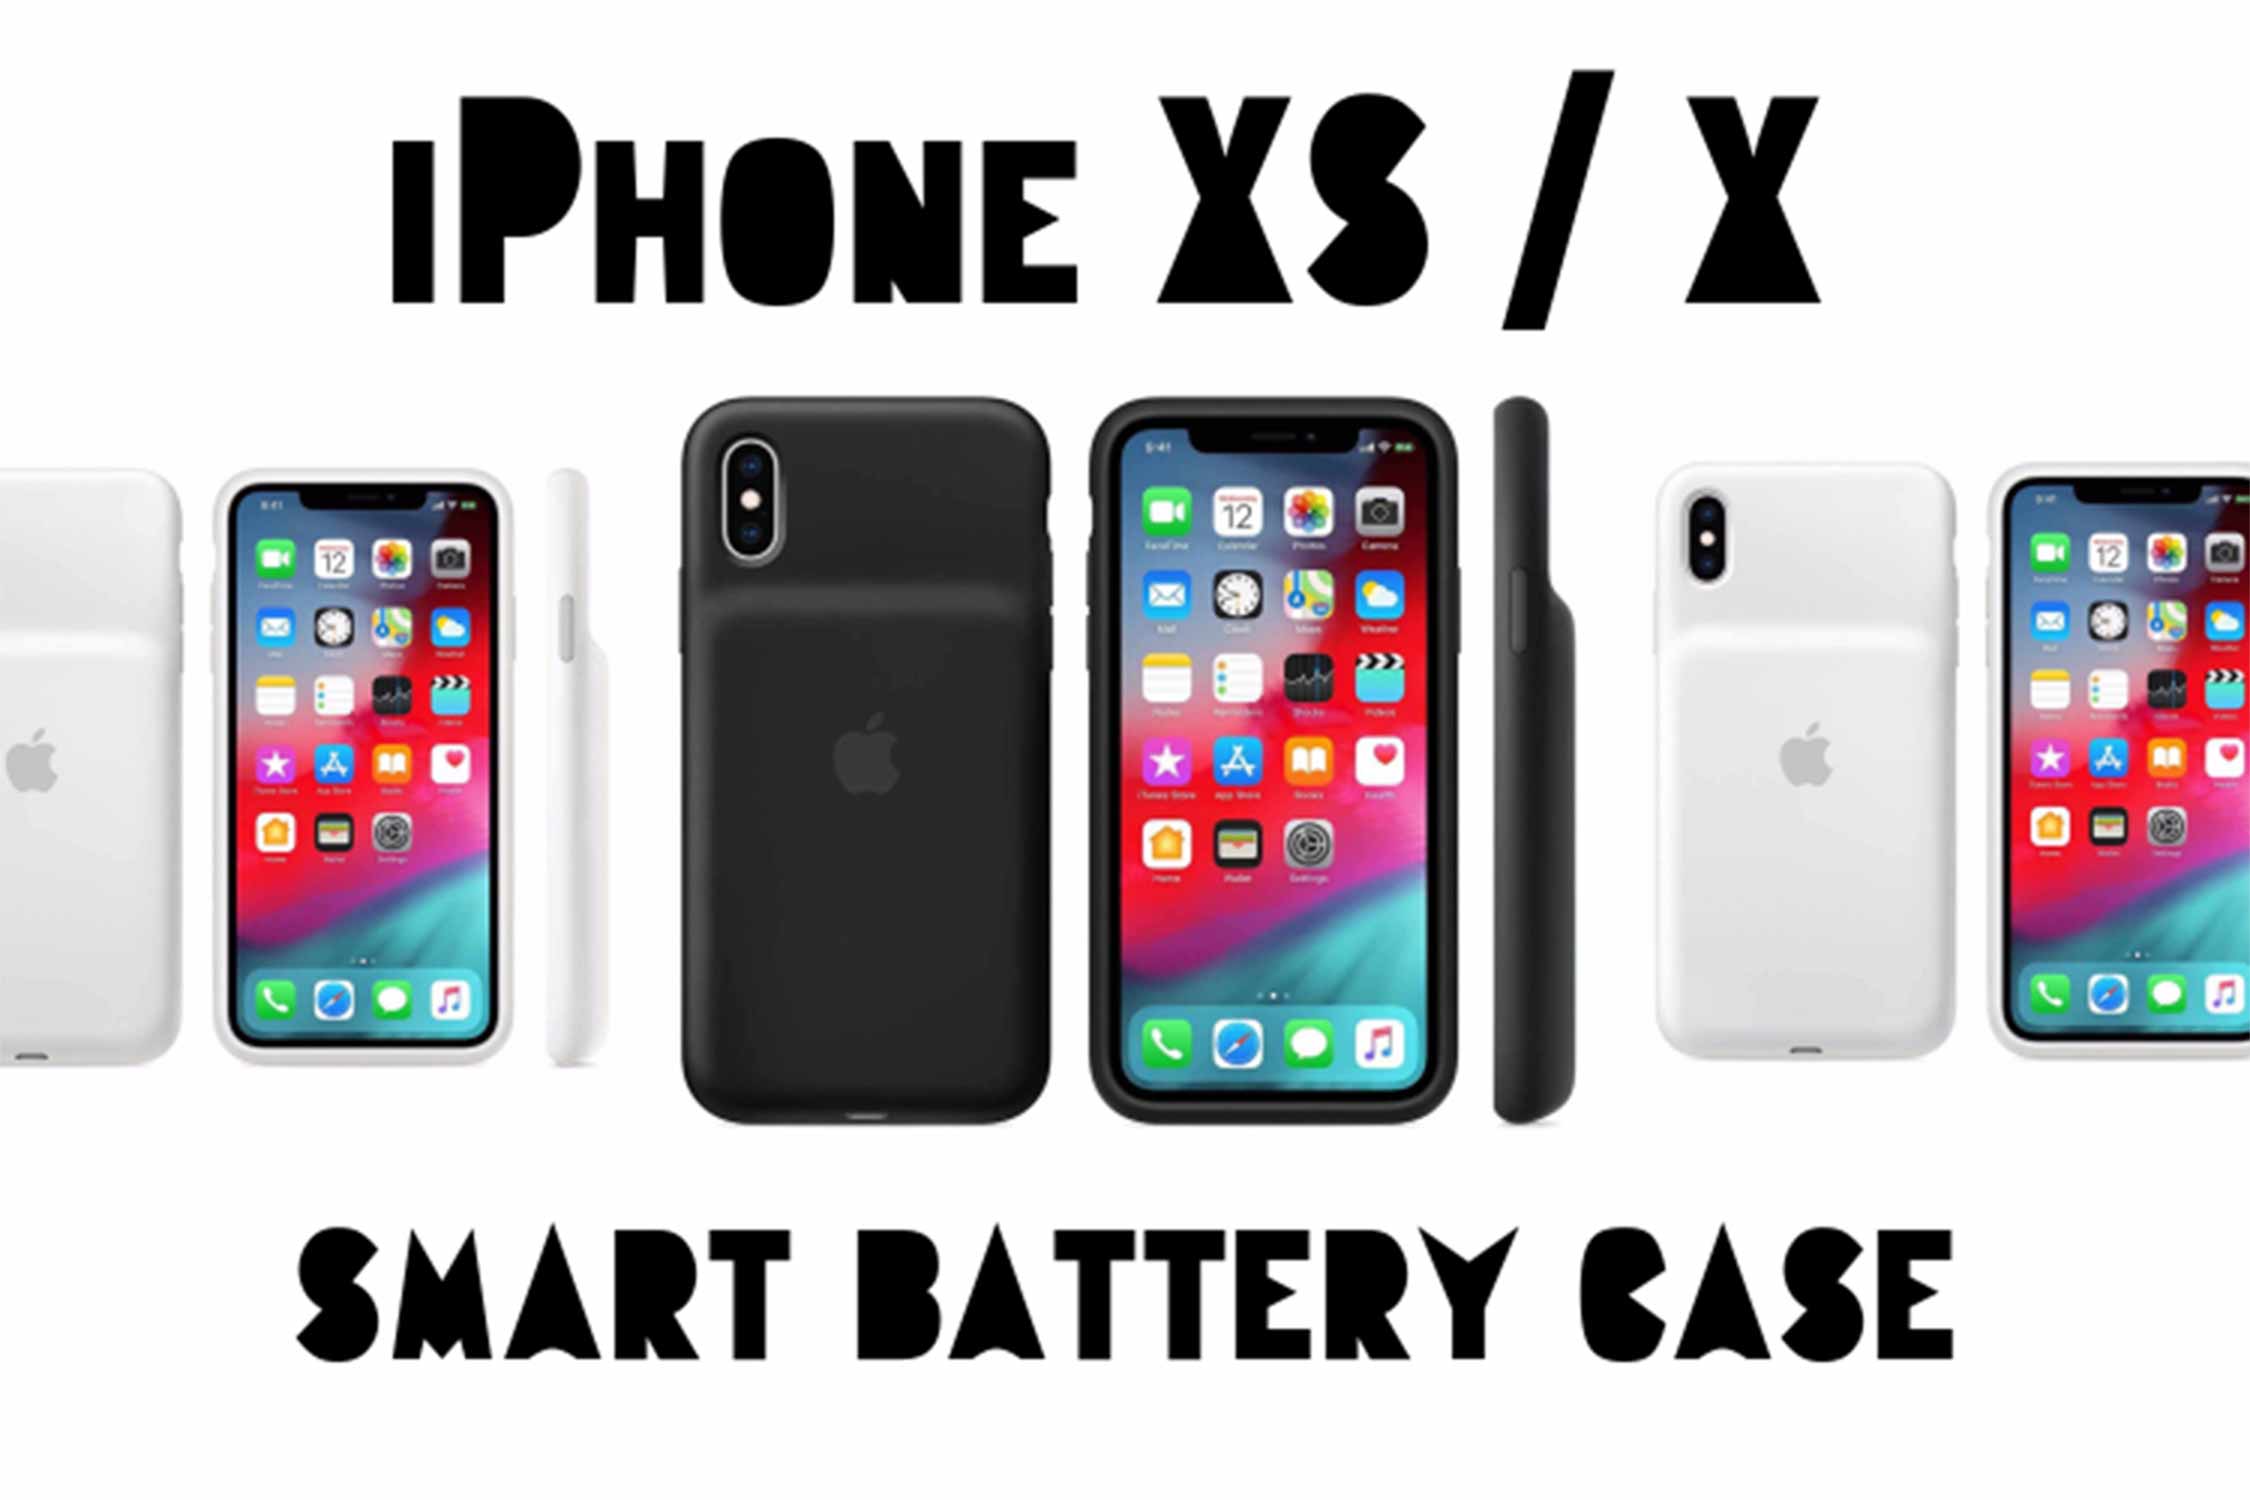 iPhone XS smart Battery case 記事アイキャッチ